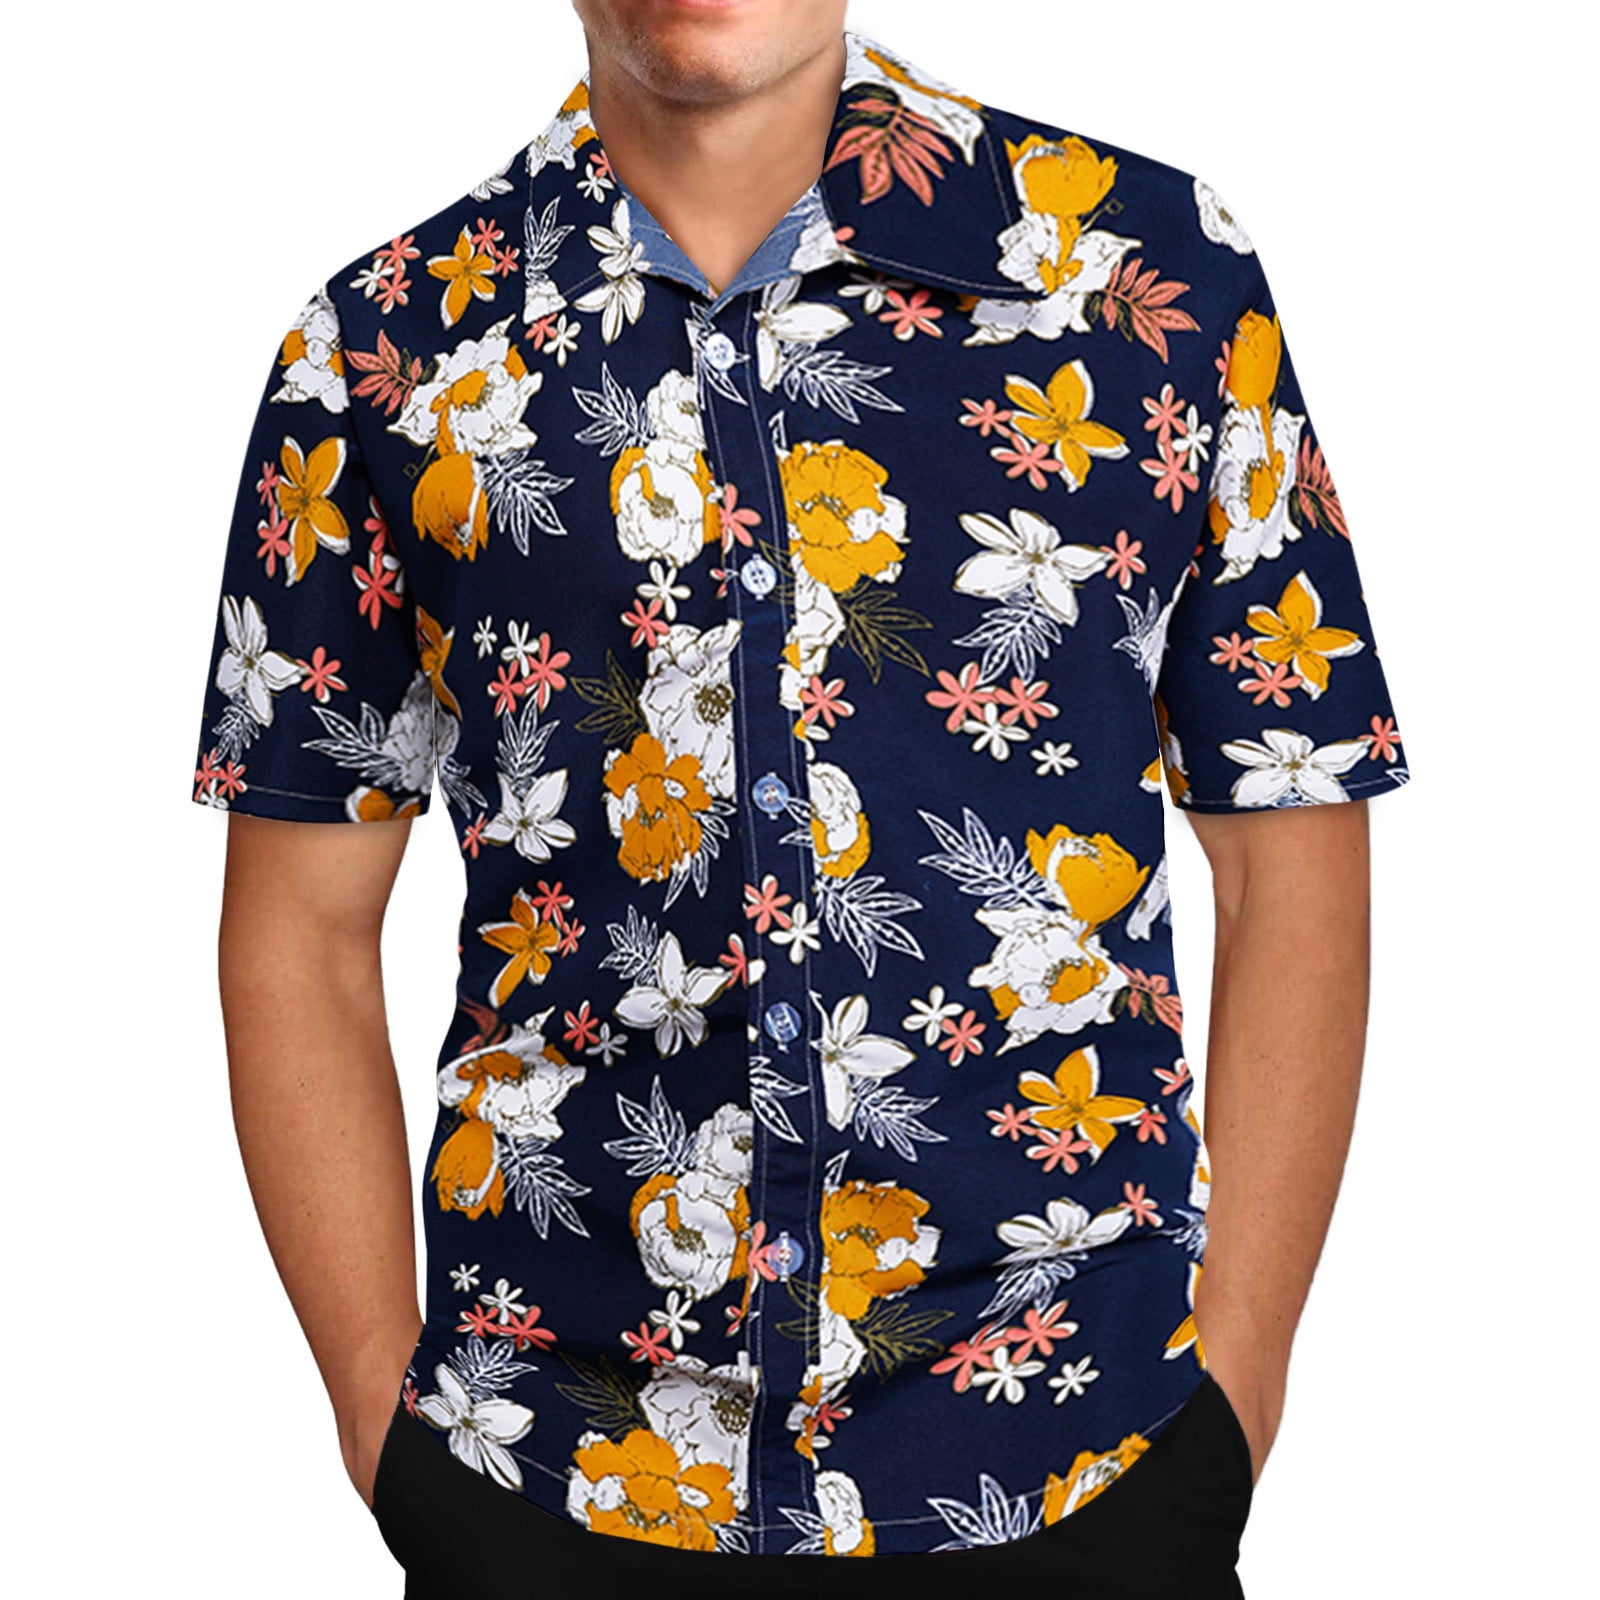 Men's All Over Print Hawaiian Floral T-shirt in Optic / Burgundy